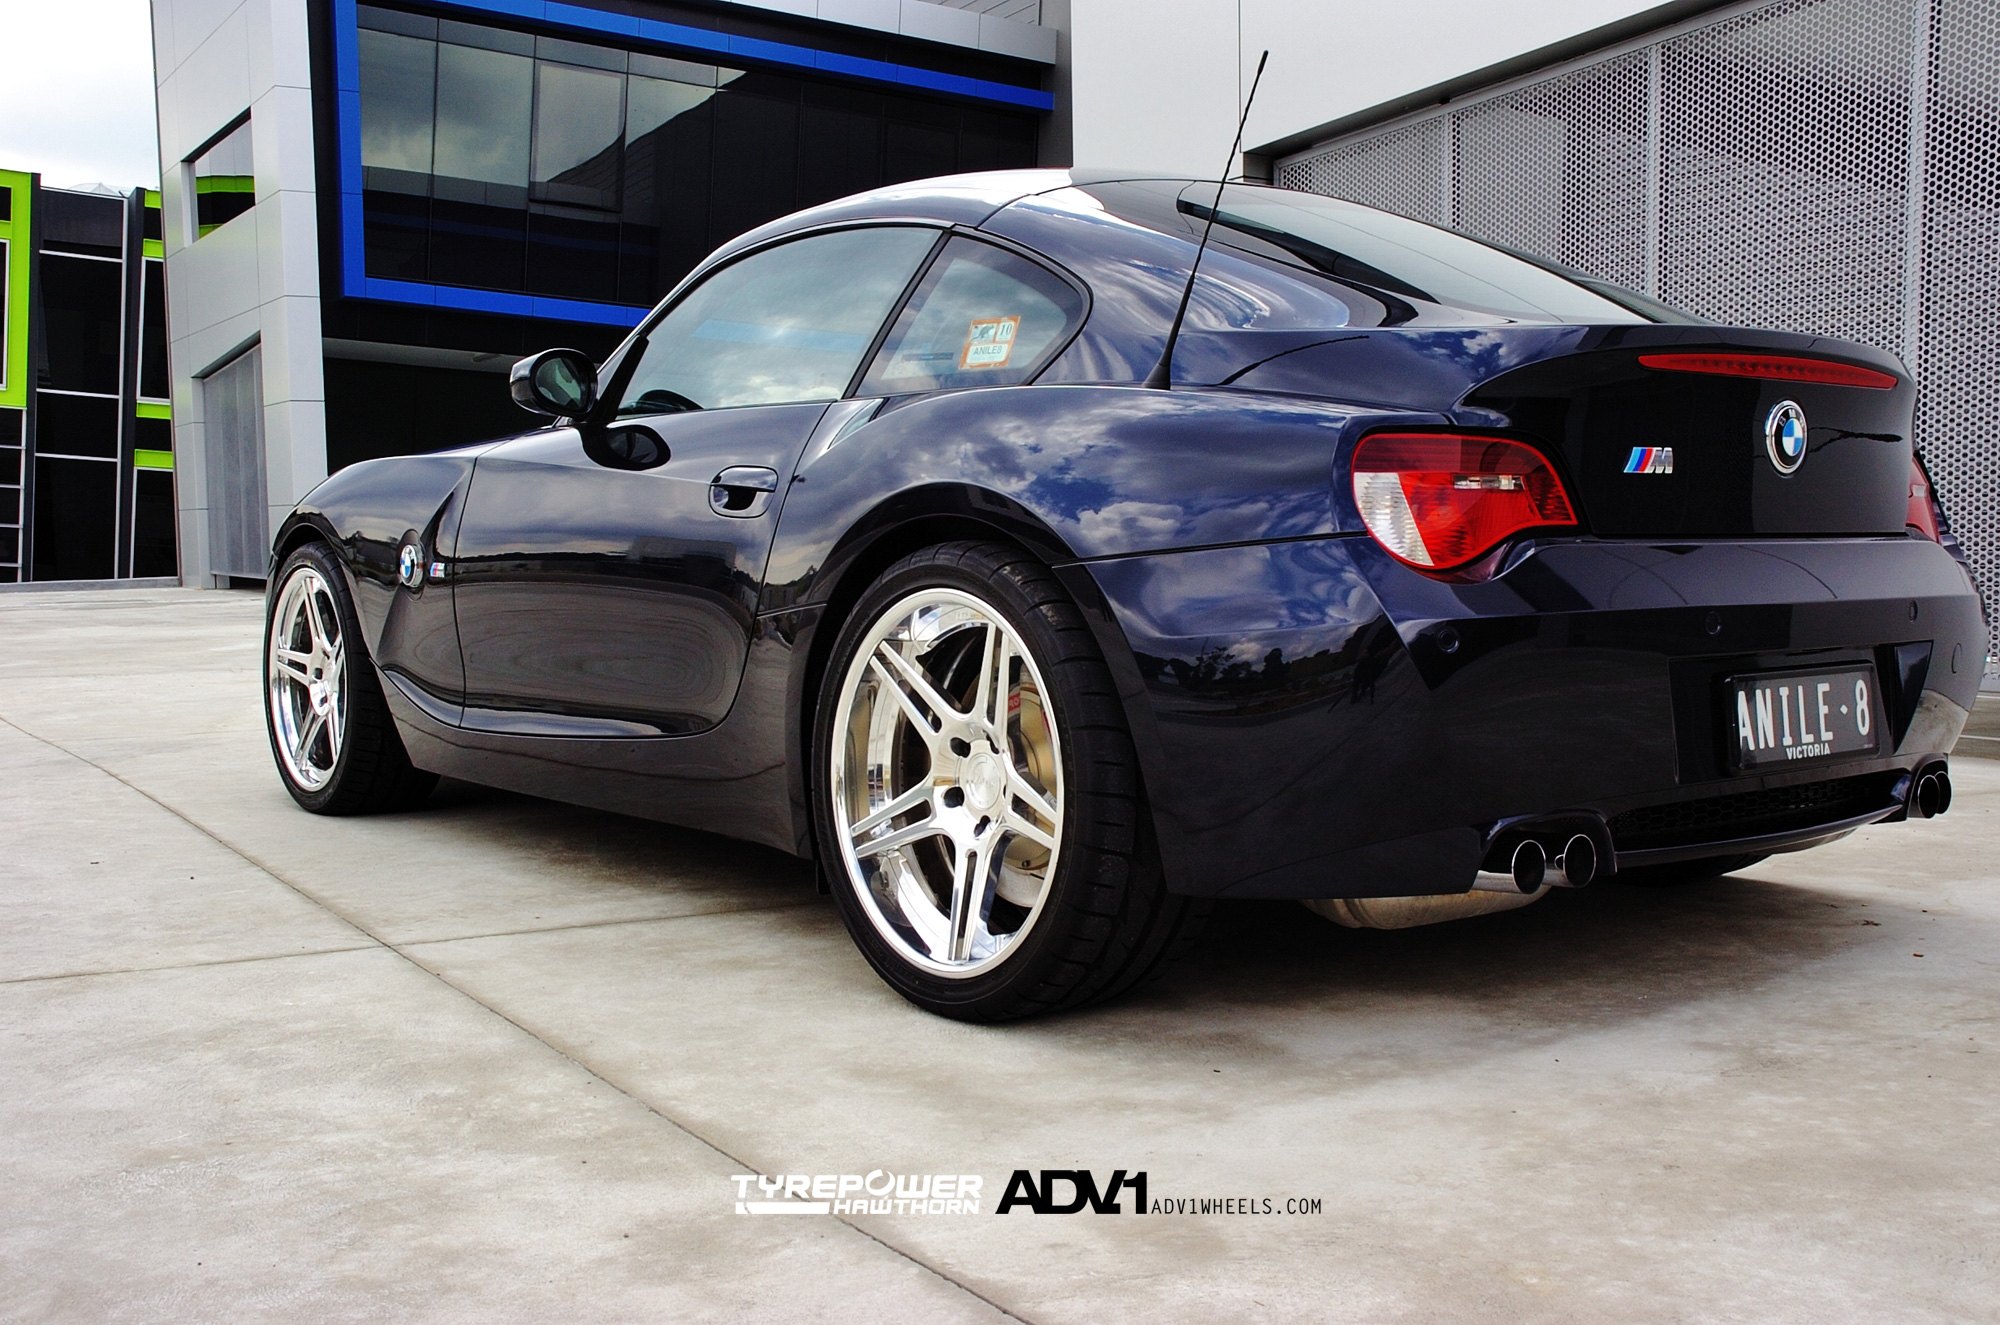 Aftermarket Rear Bumper Cover on Dark Blue BMW Z4M - Photo by ADV.1